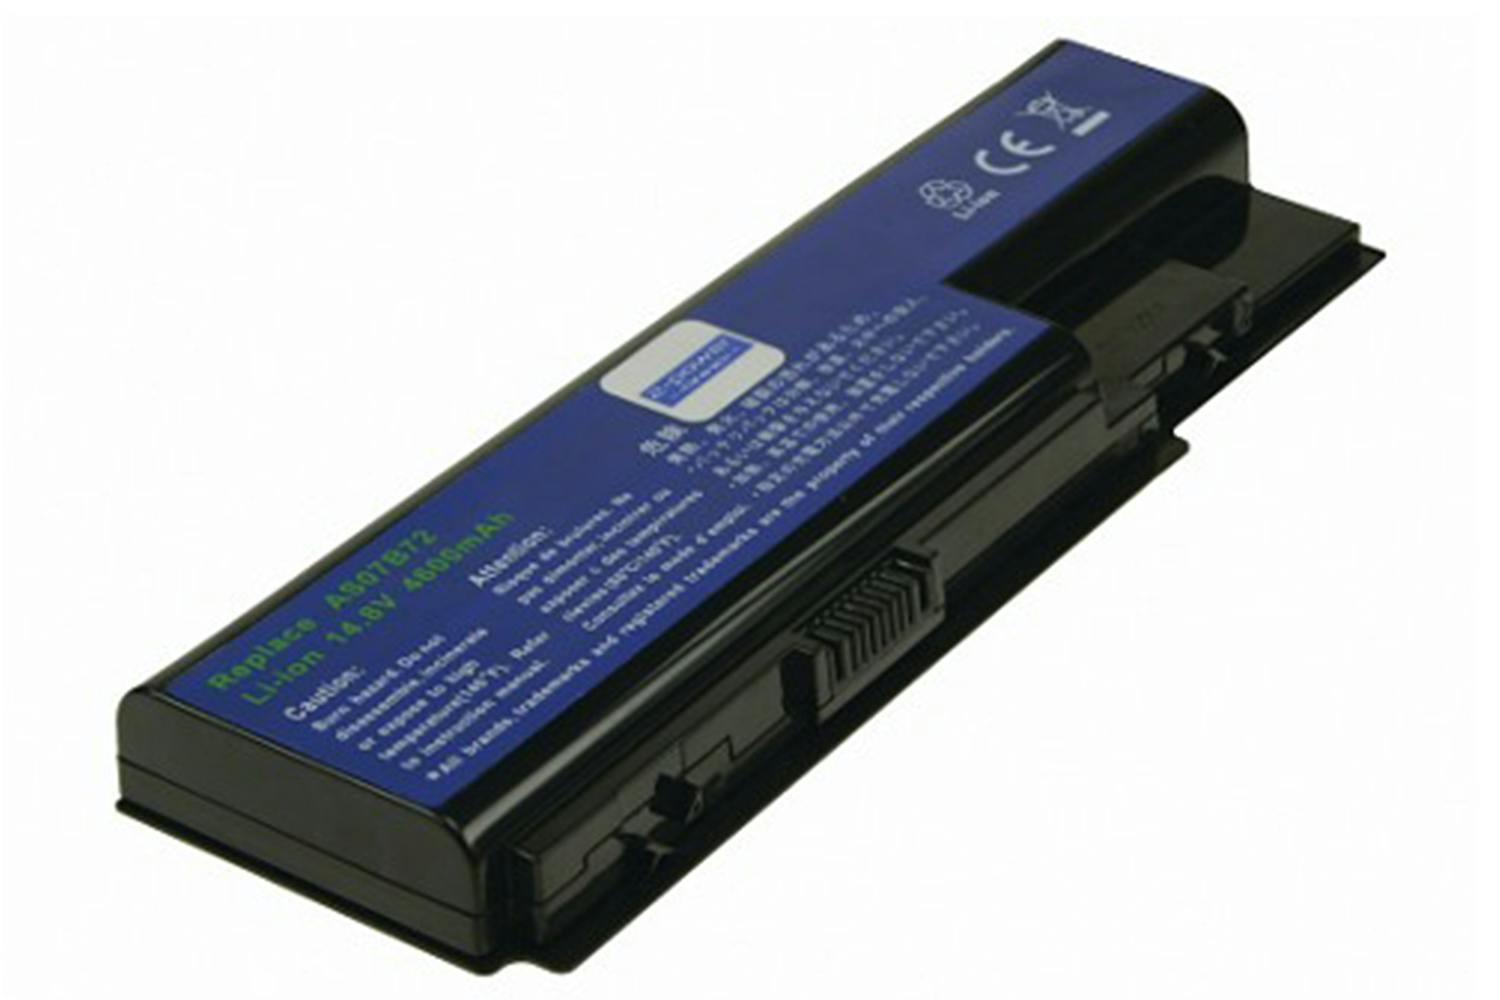 Батарея на ноутбук асер. Li-ion 14.8v 4400mah. Батарея ноутбука Acer модель Aspire 26. Red Battery Pack 14.8v.